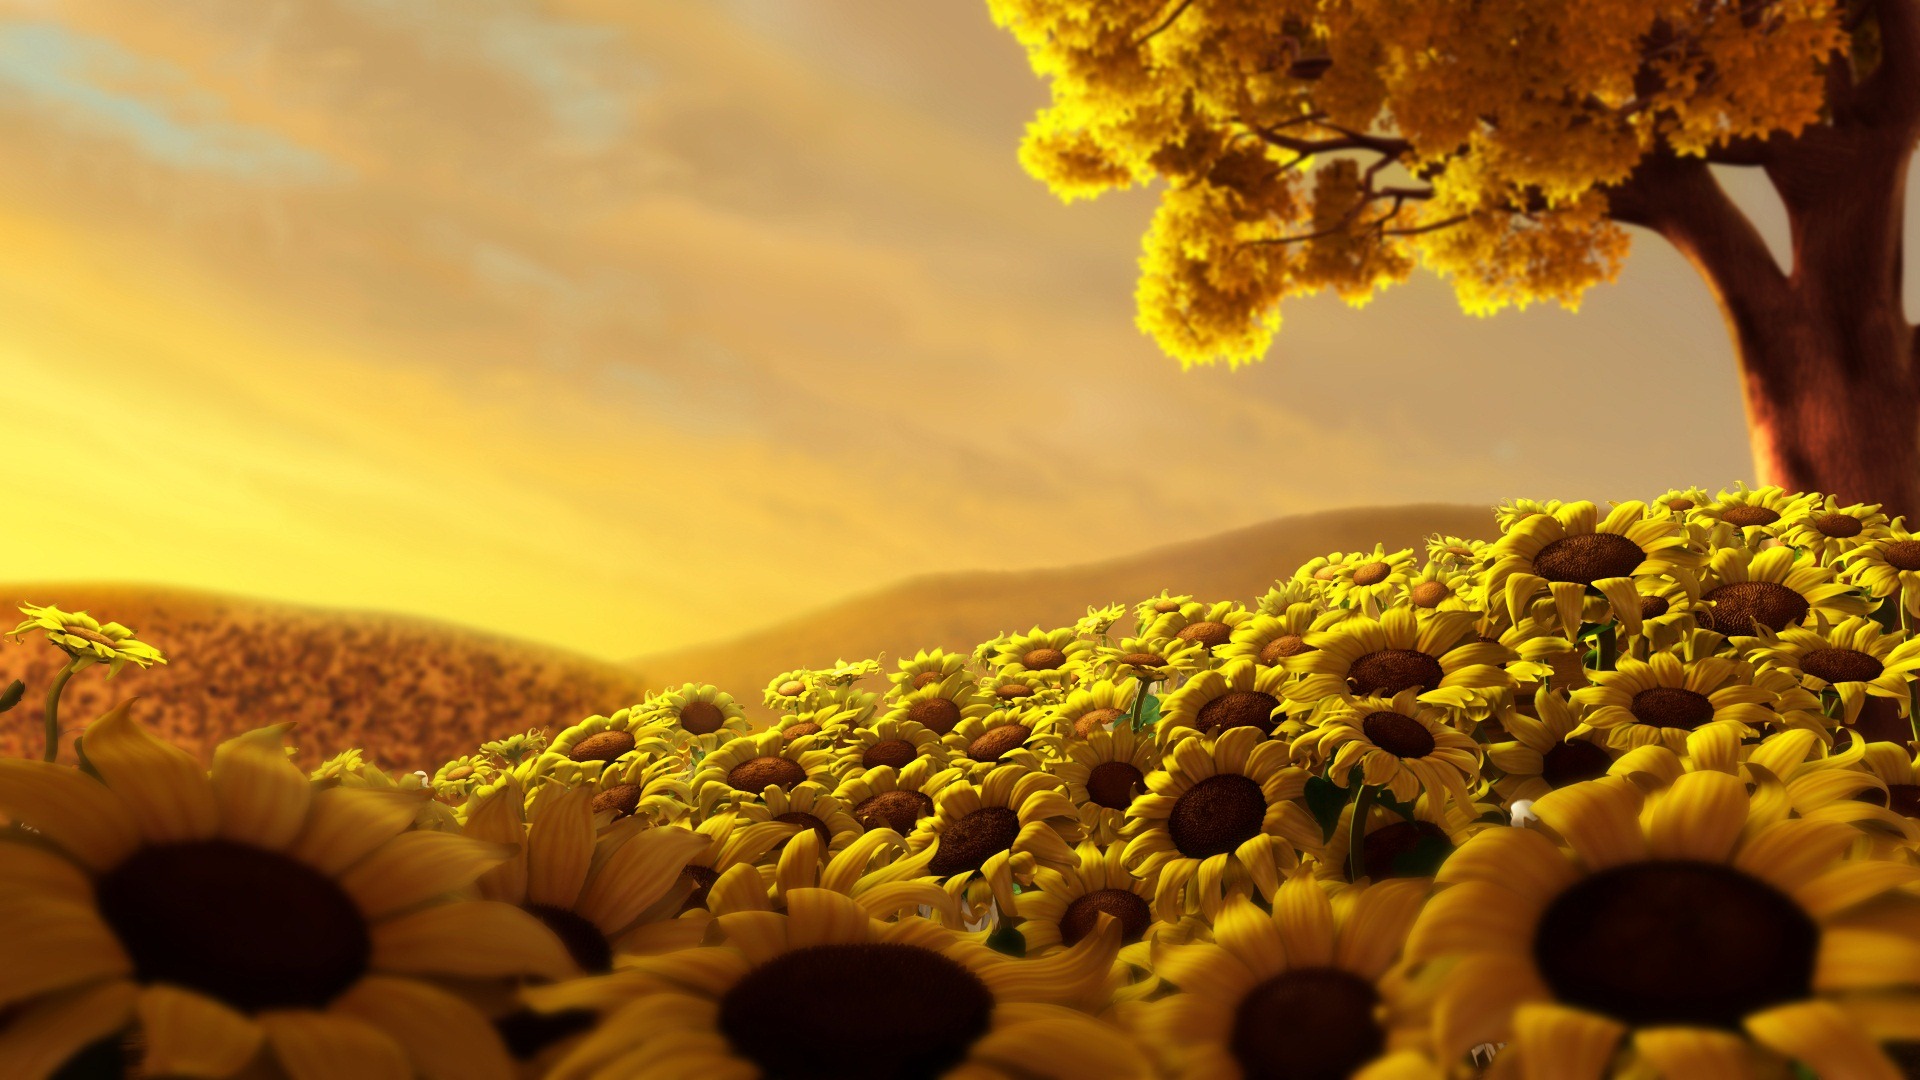 sun flower wallpaper hd image